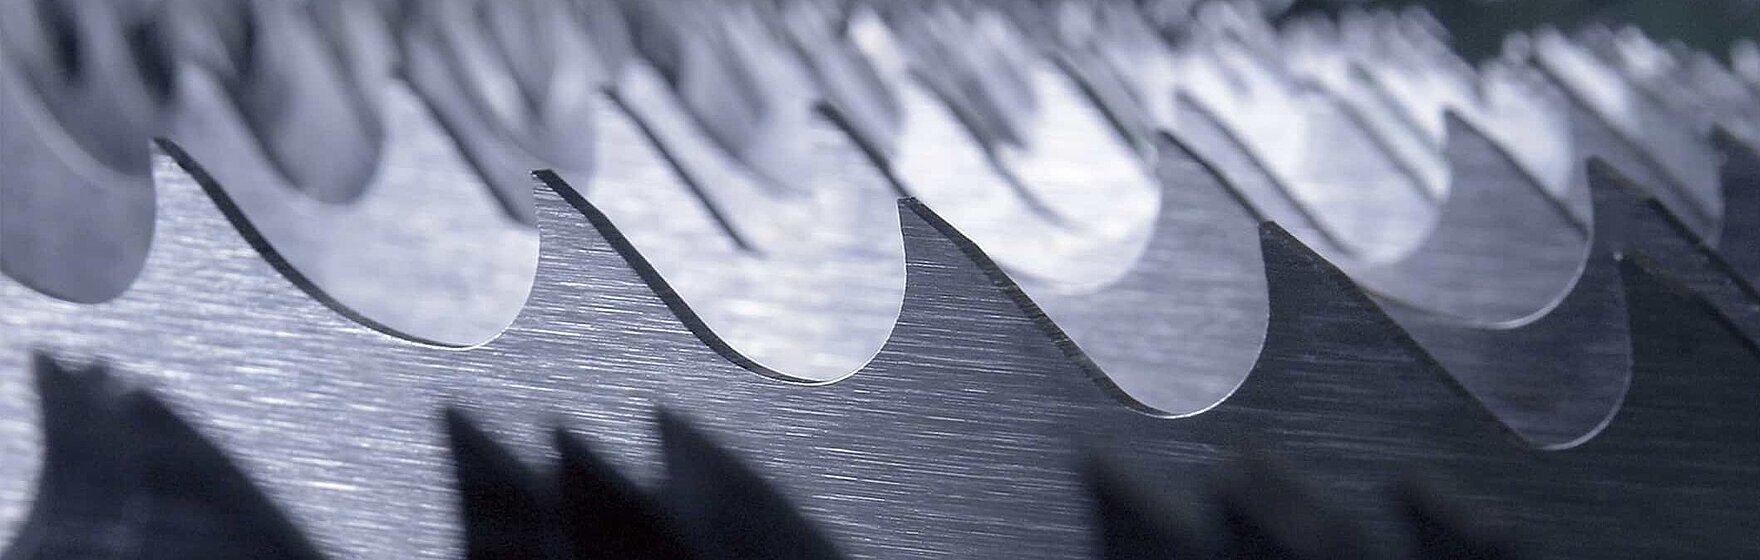 Diamond-coated band saw blades